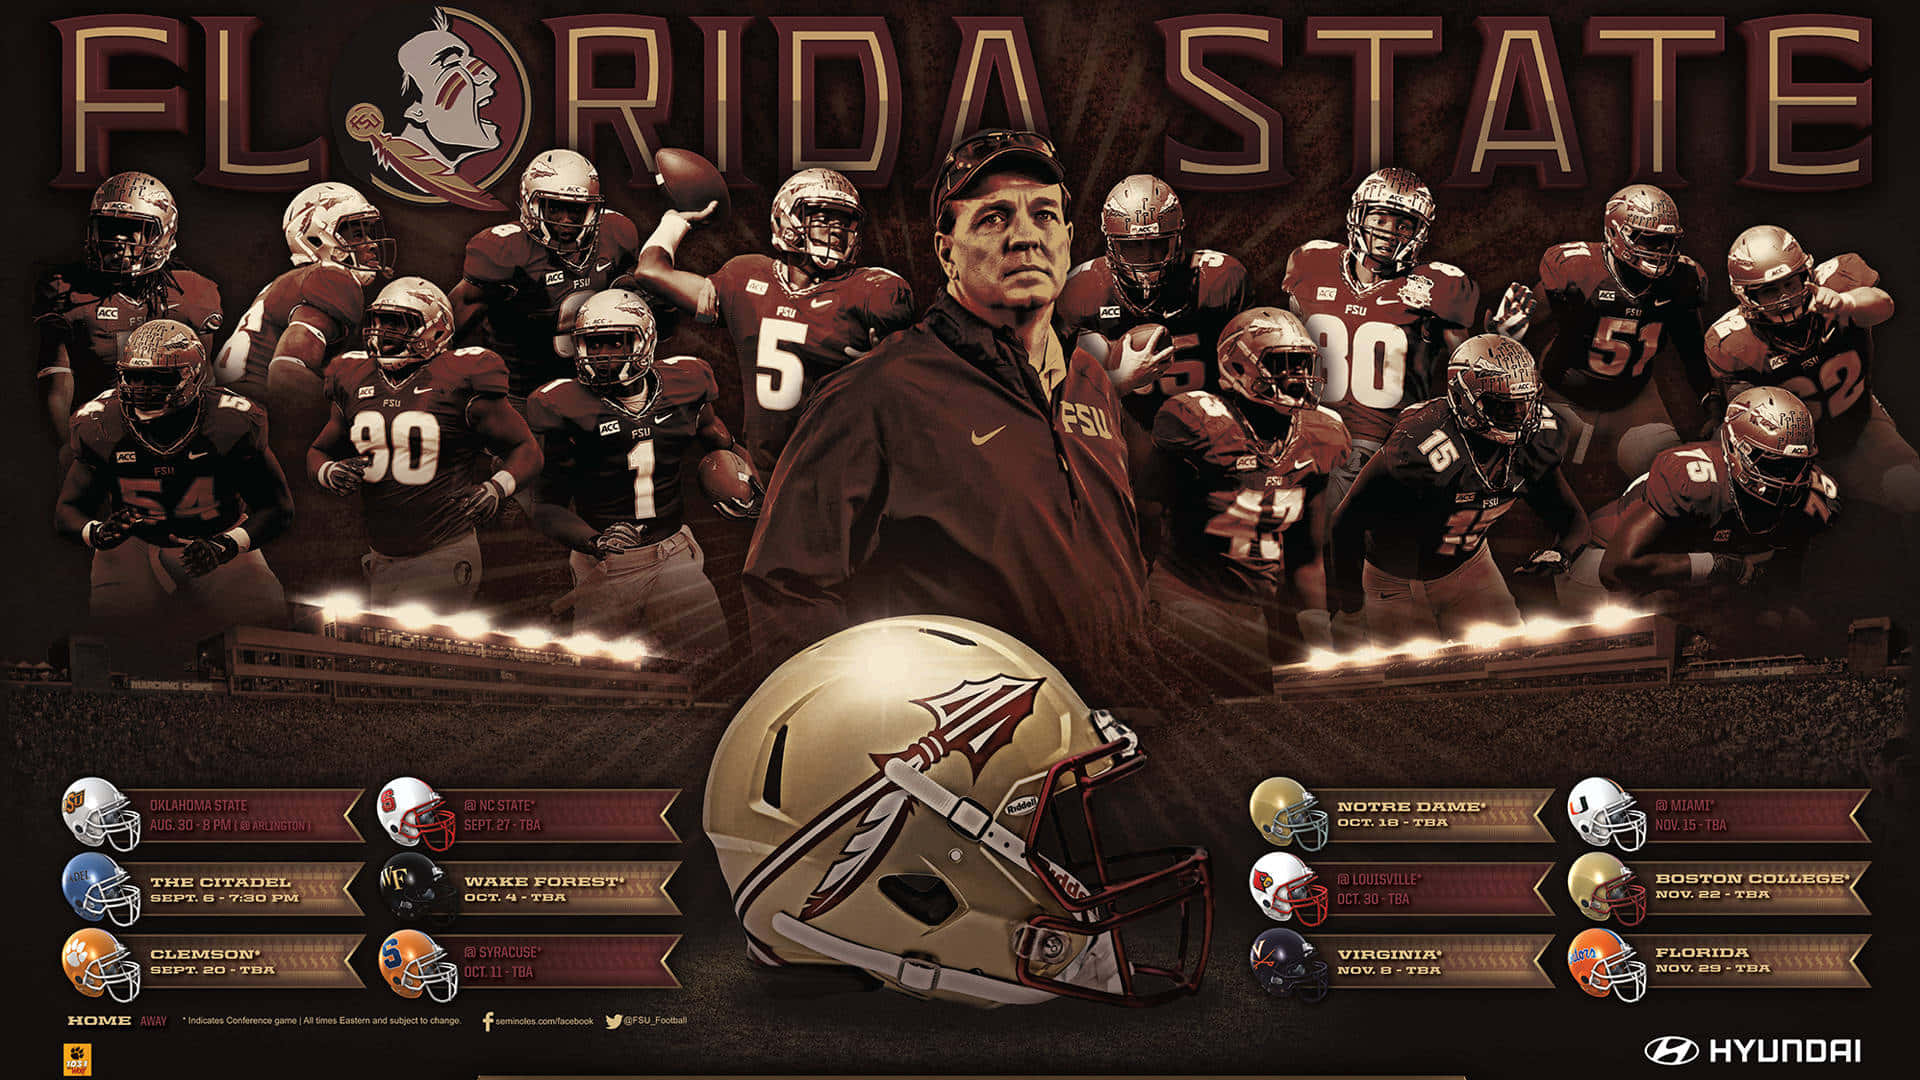 Posterdes Florida State Footballteams Wallpaper